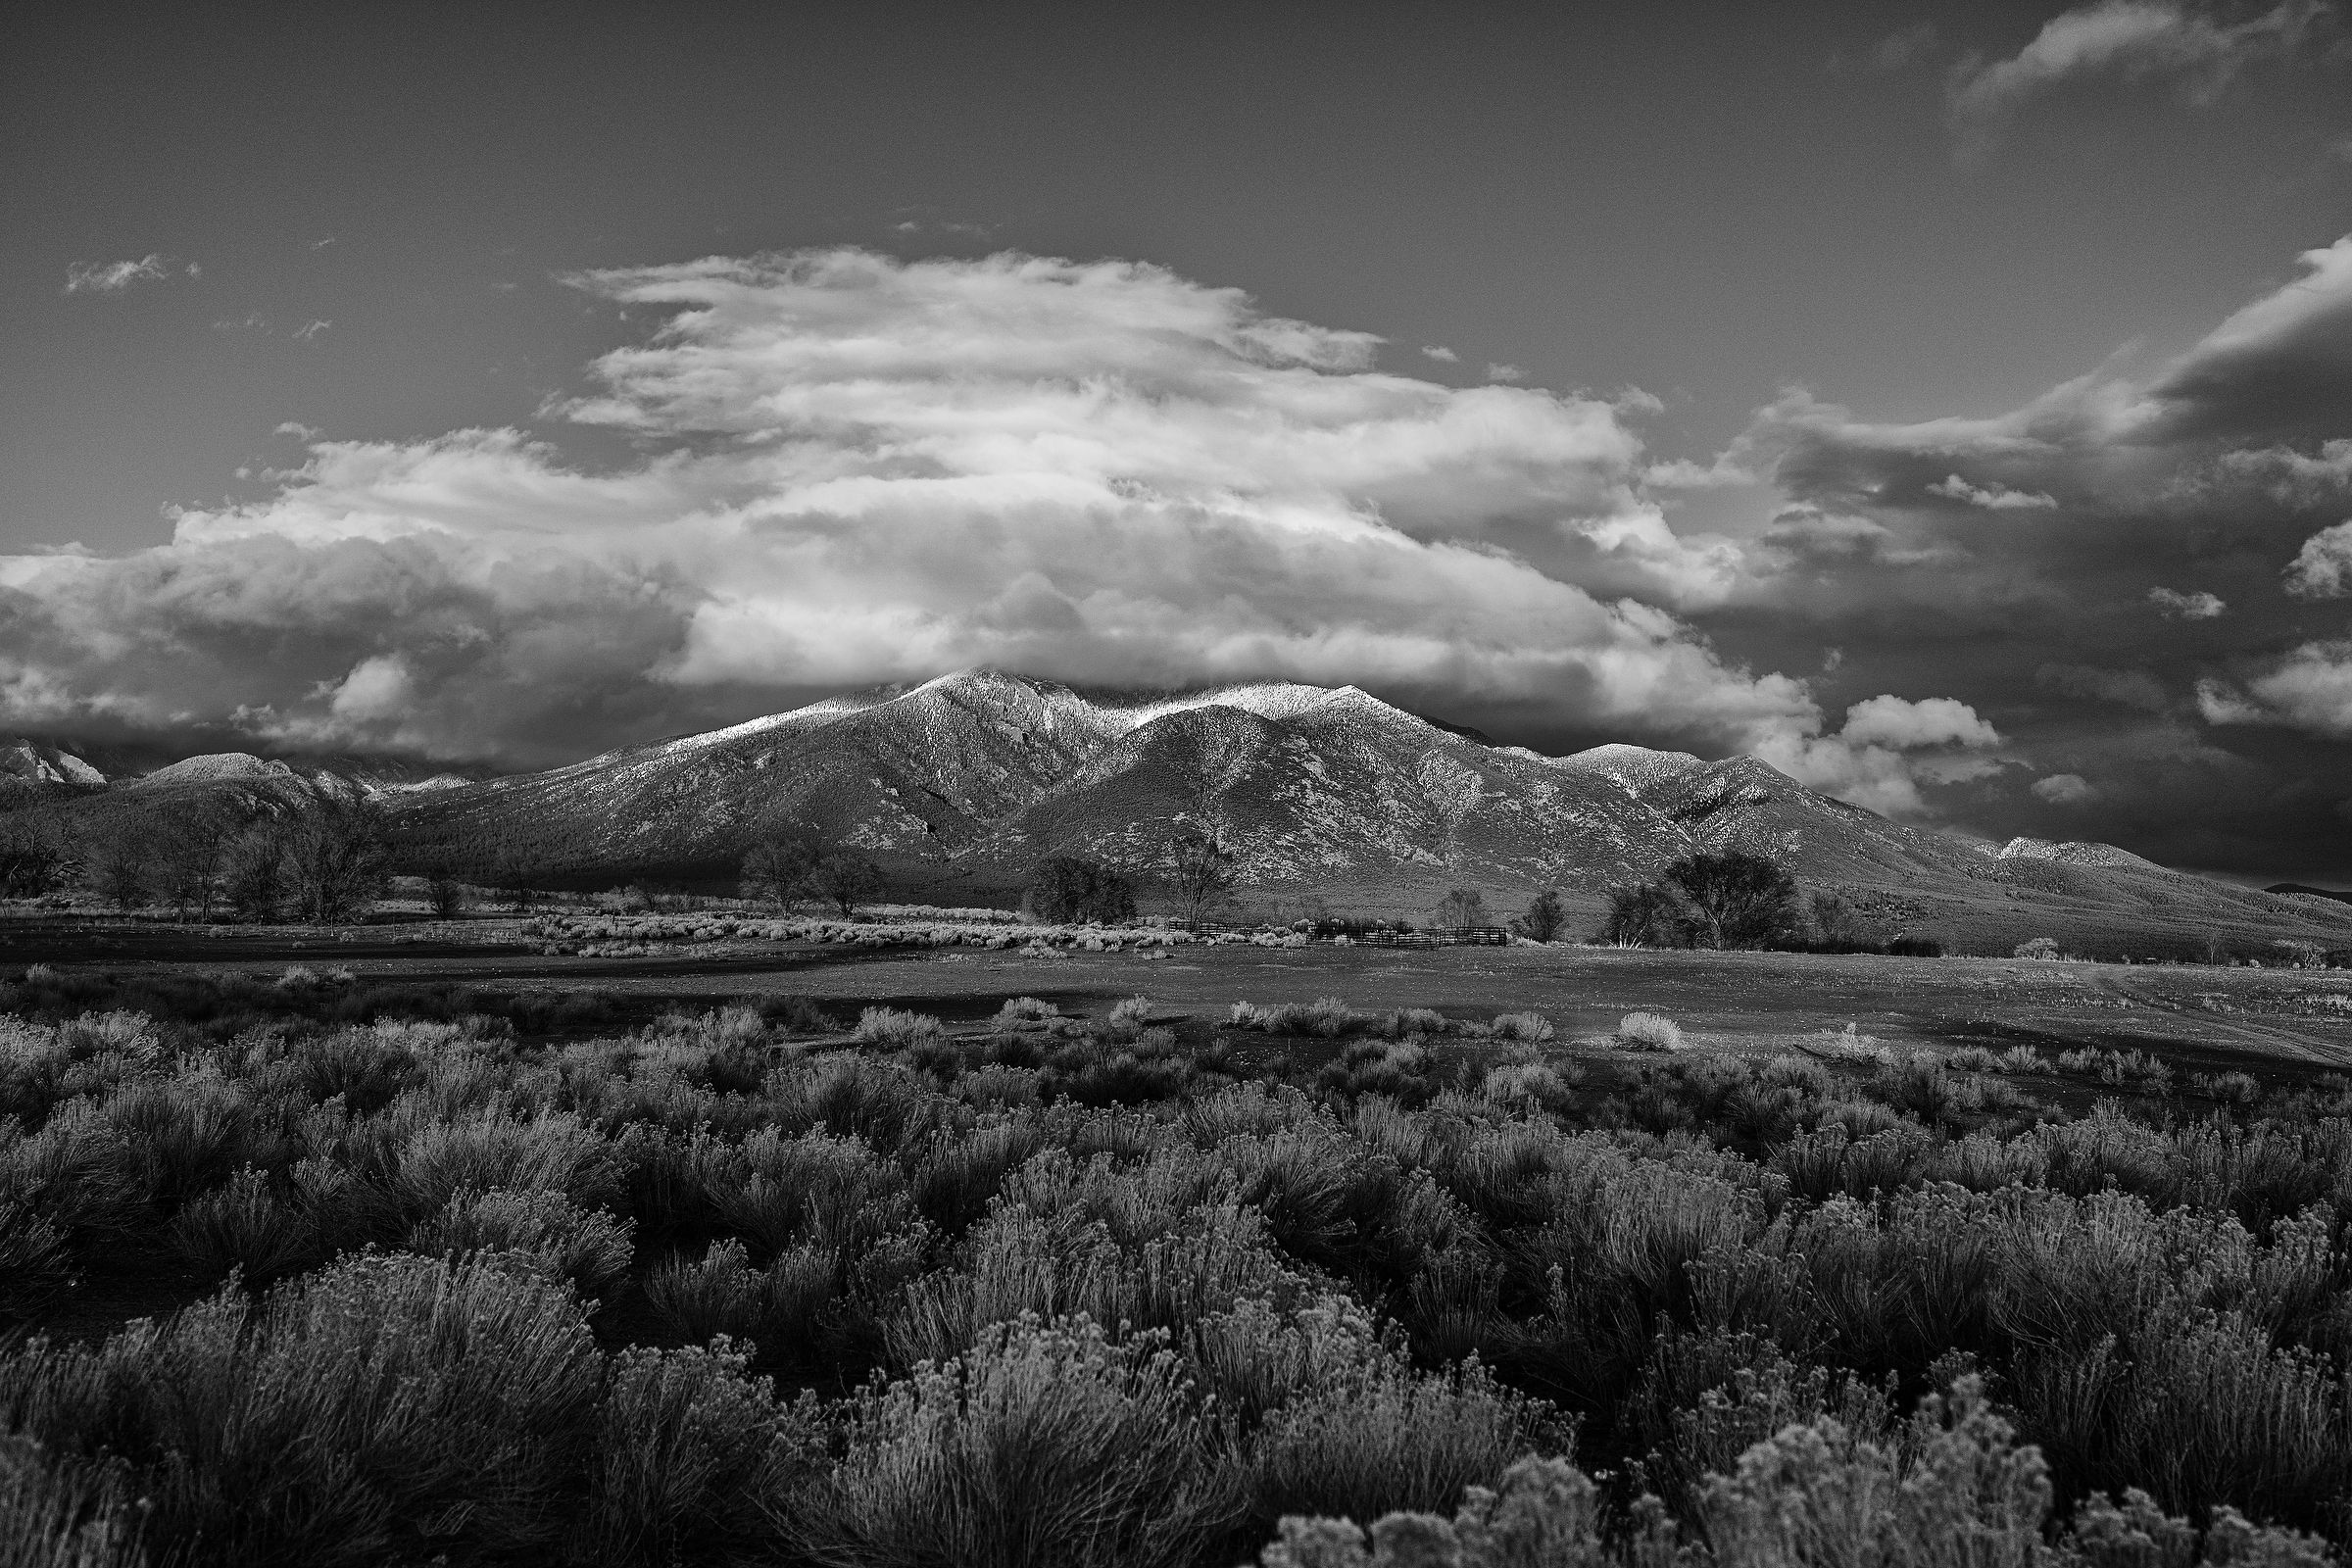 Winter Landscape #2, Taos, New Mexico